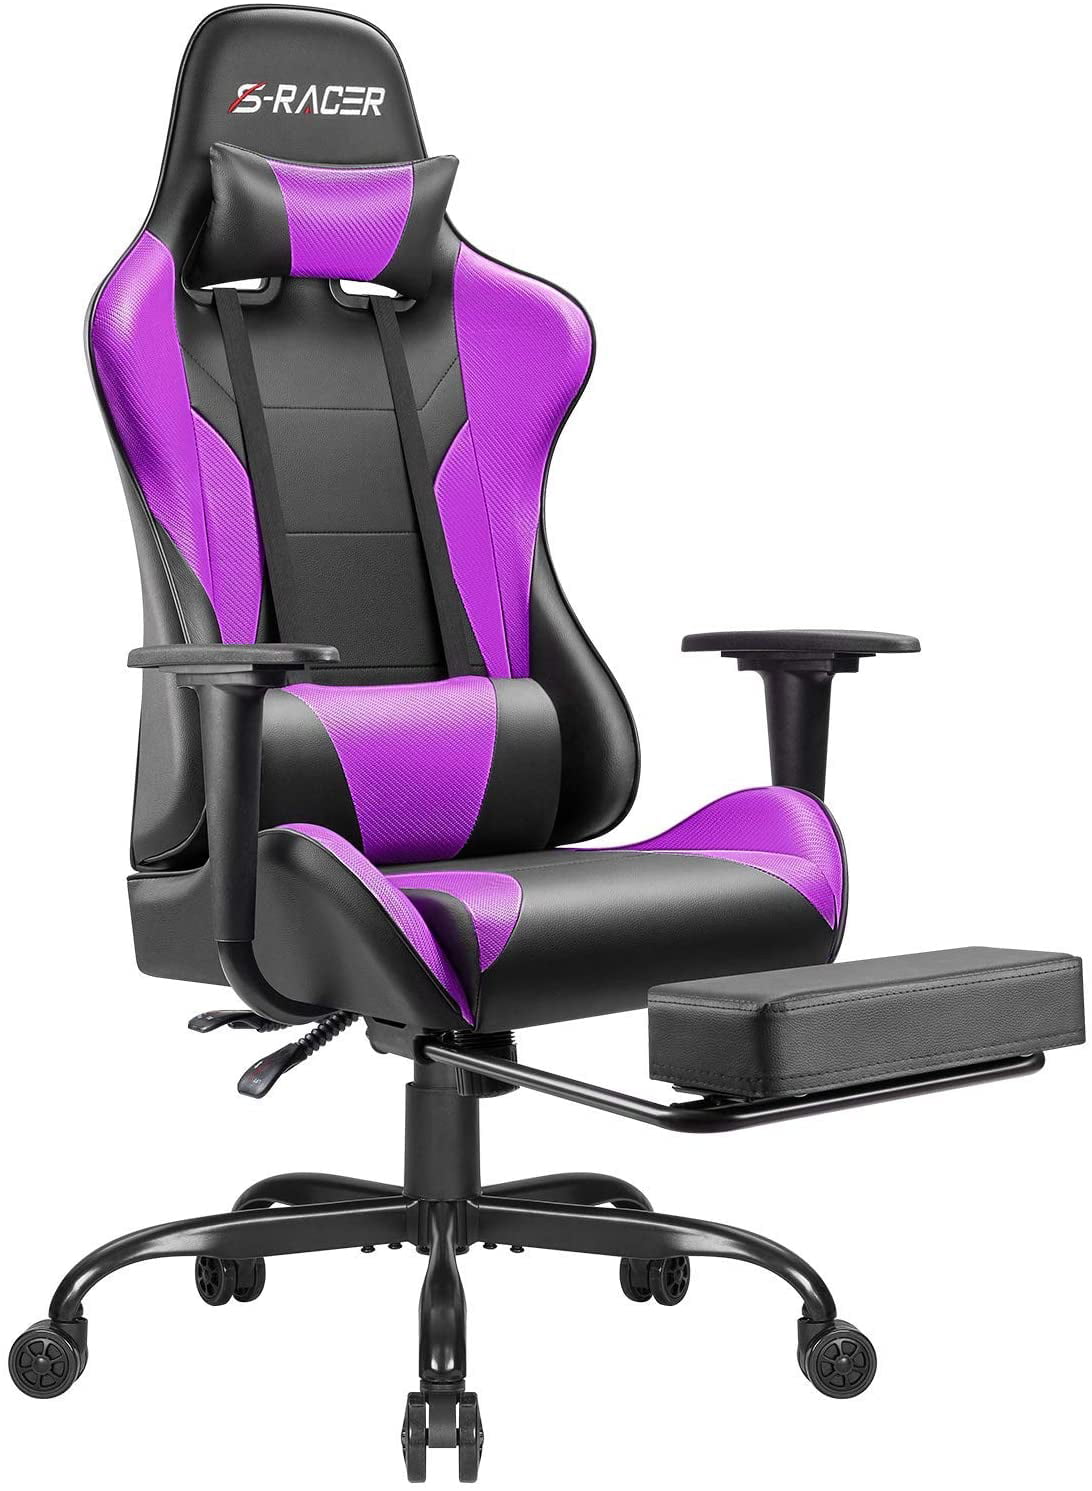 Walnew High Back Gaming Chair Ergonomic Gaming Computer Chair,Purple